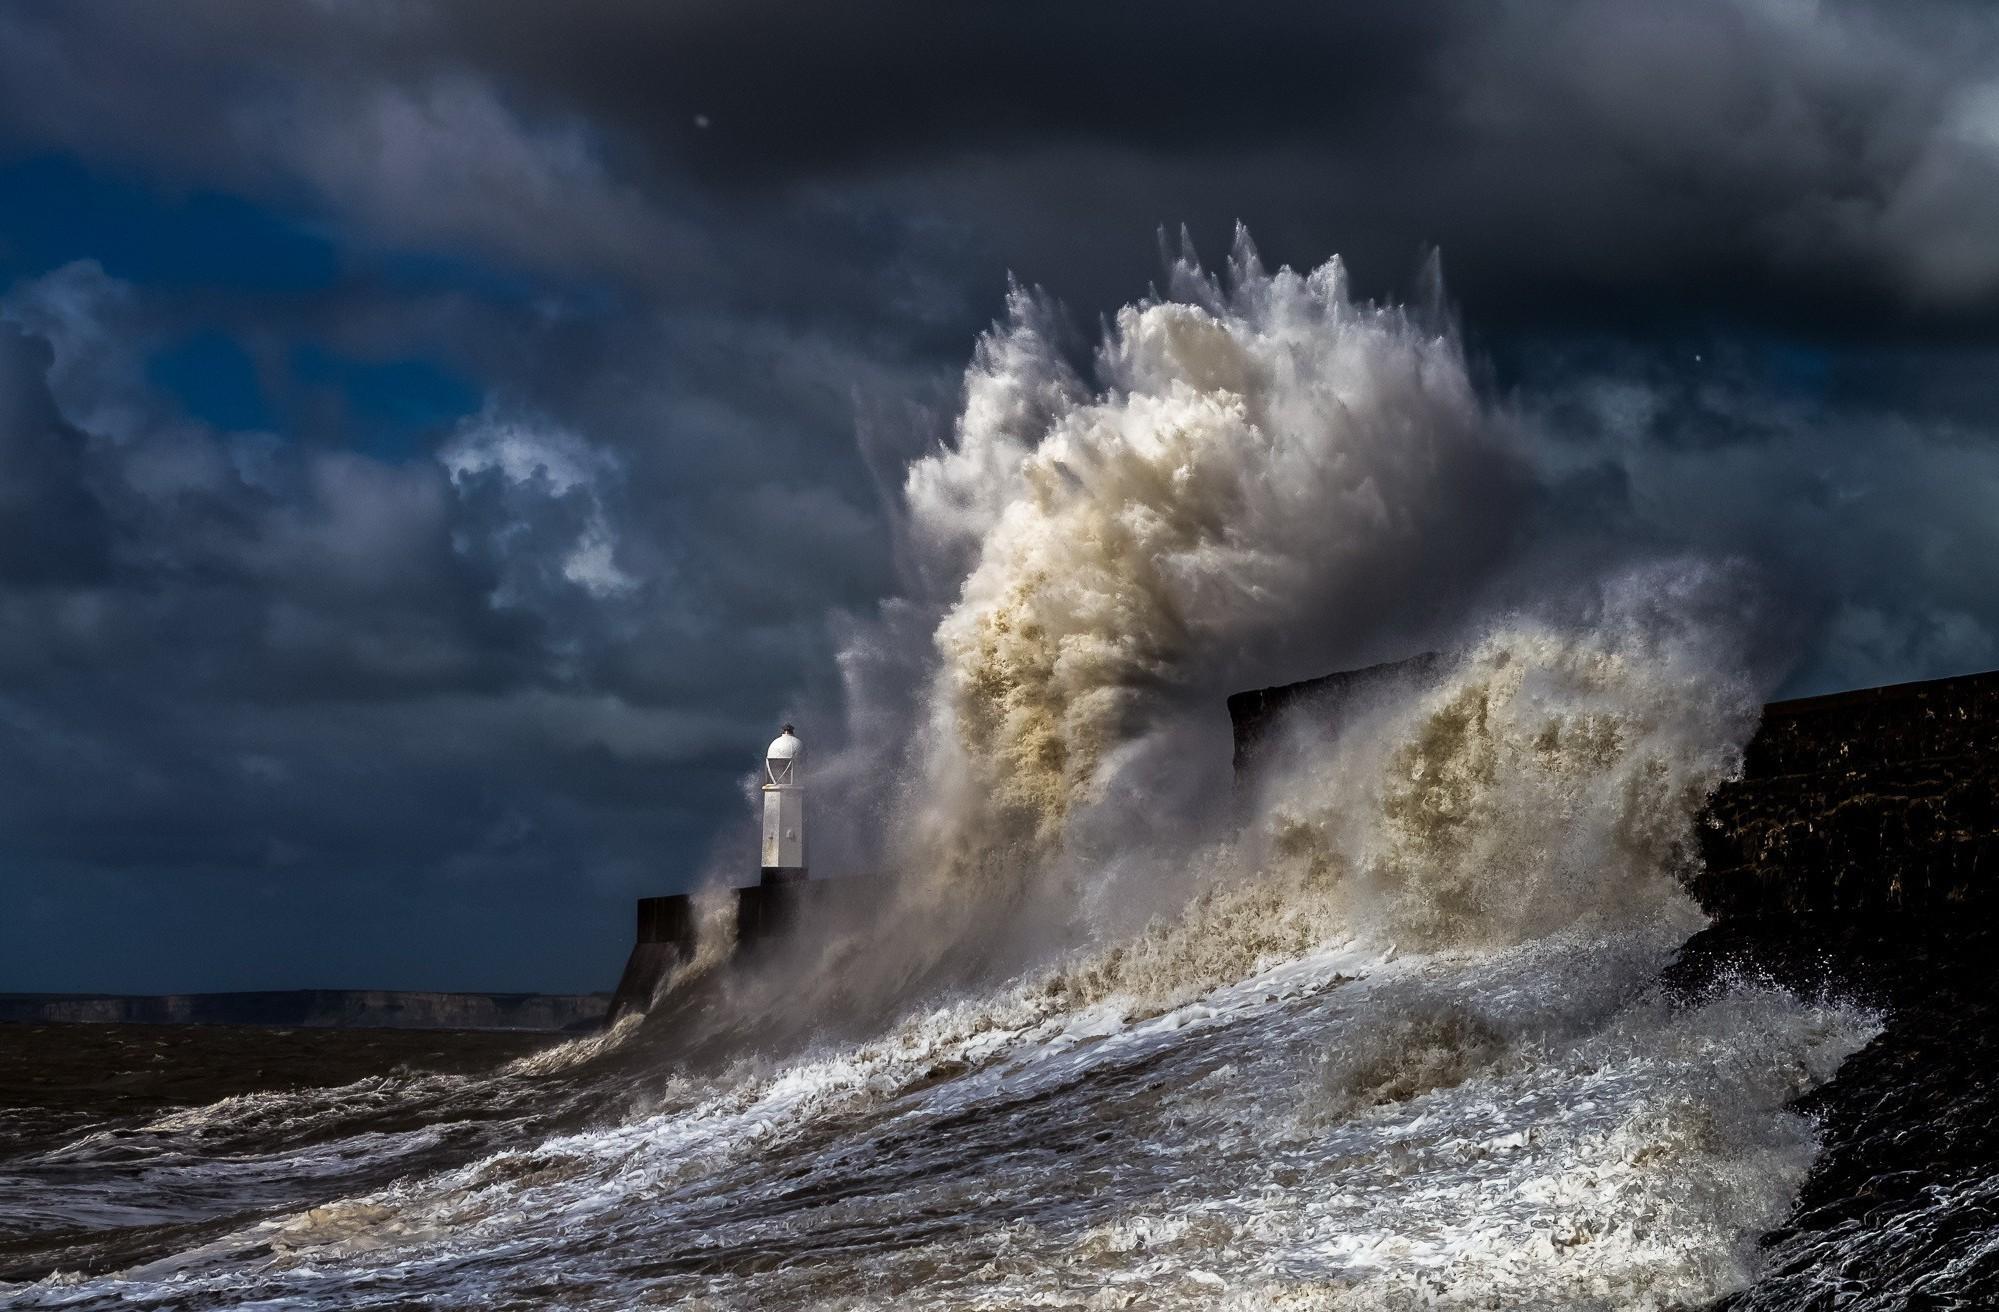 #water, #storm, #nature, #lighthouse, #coast, #sea